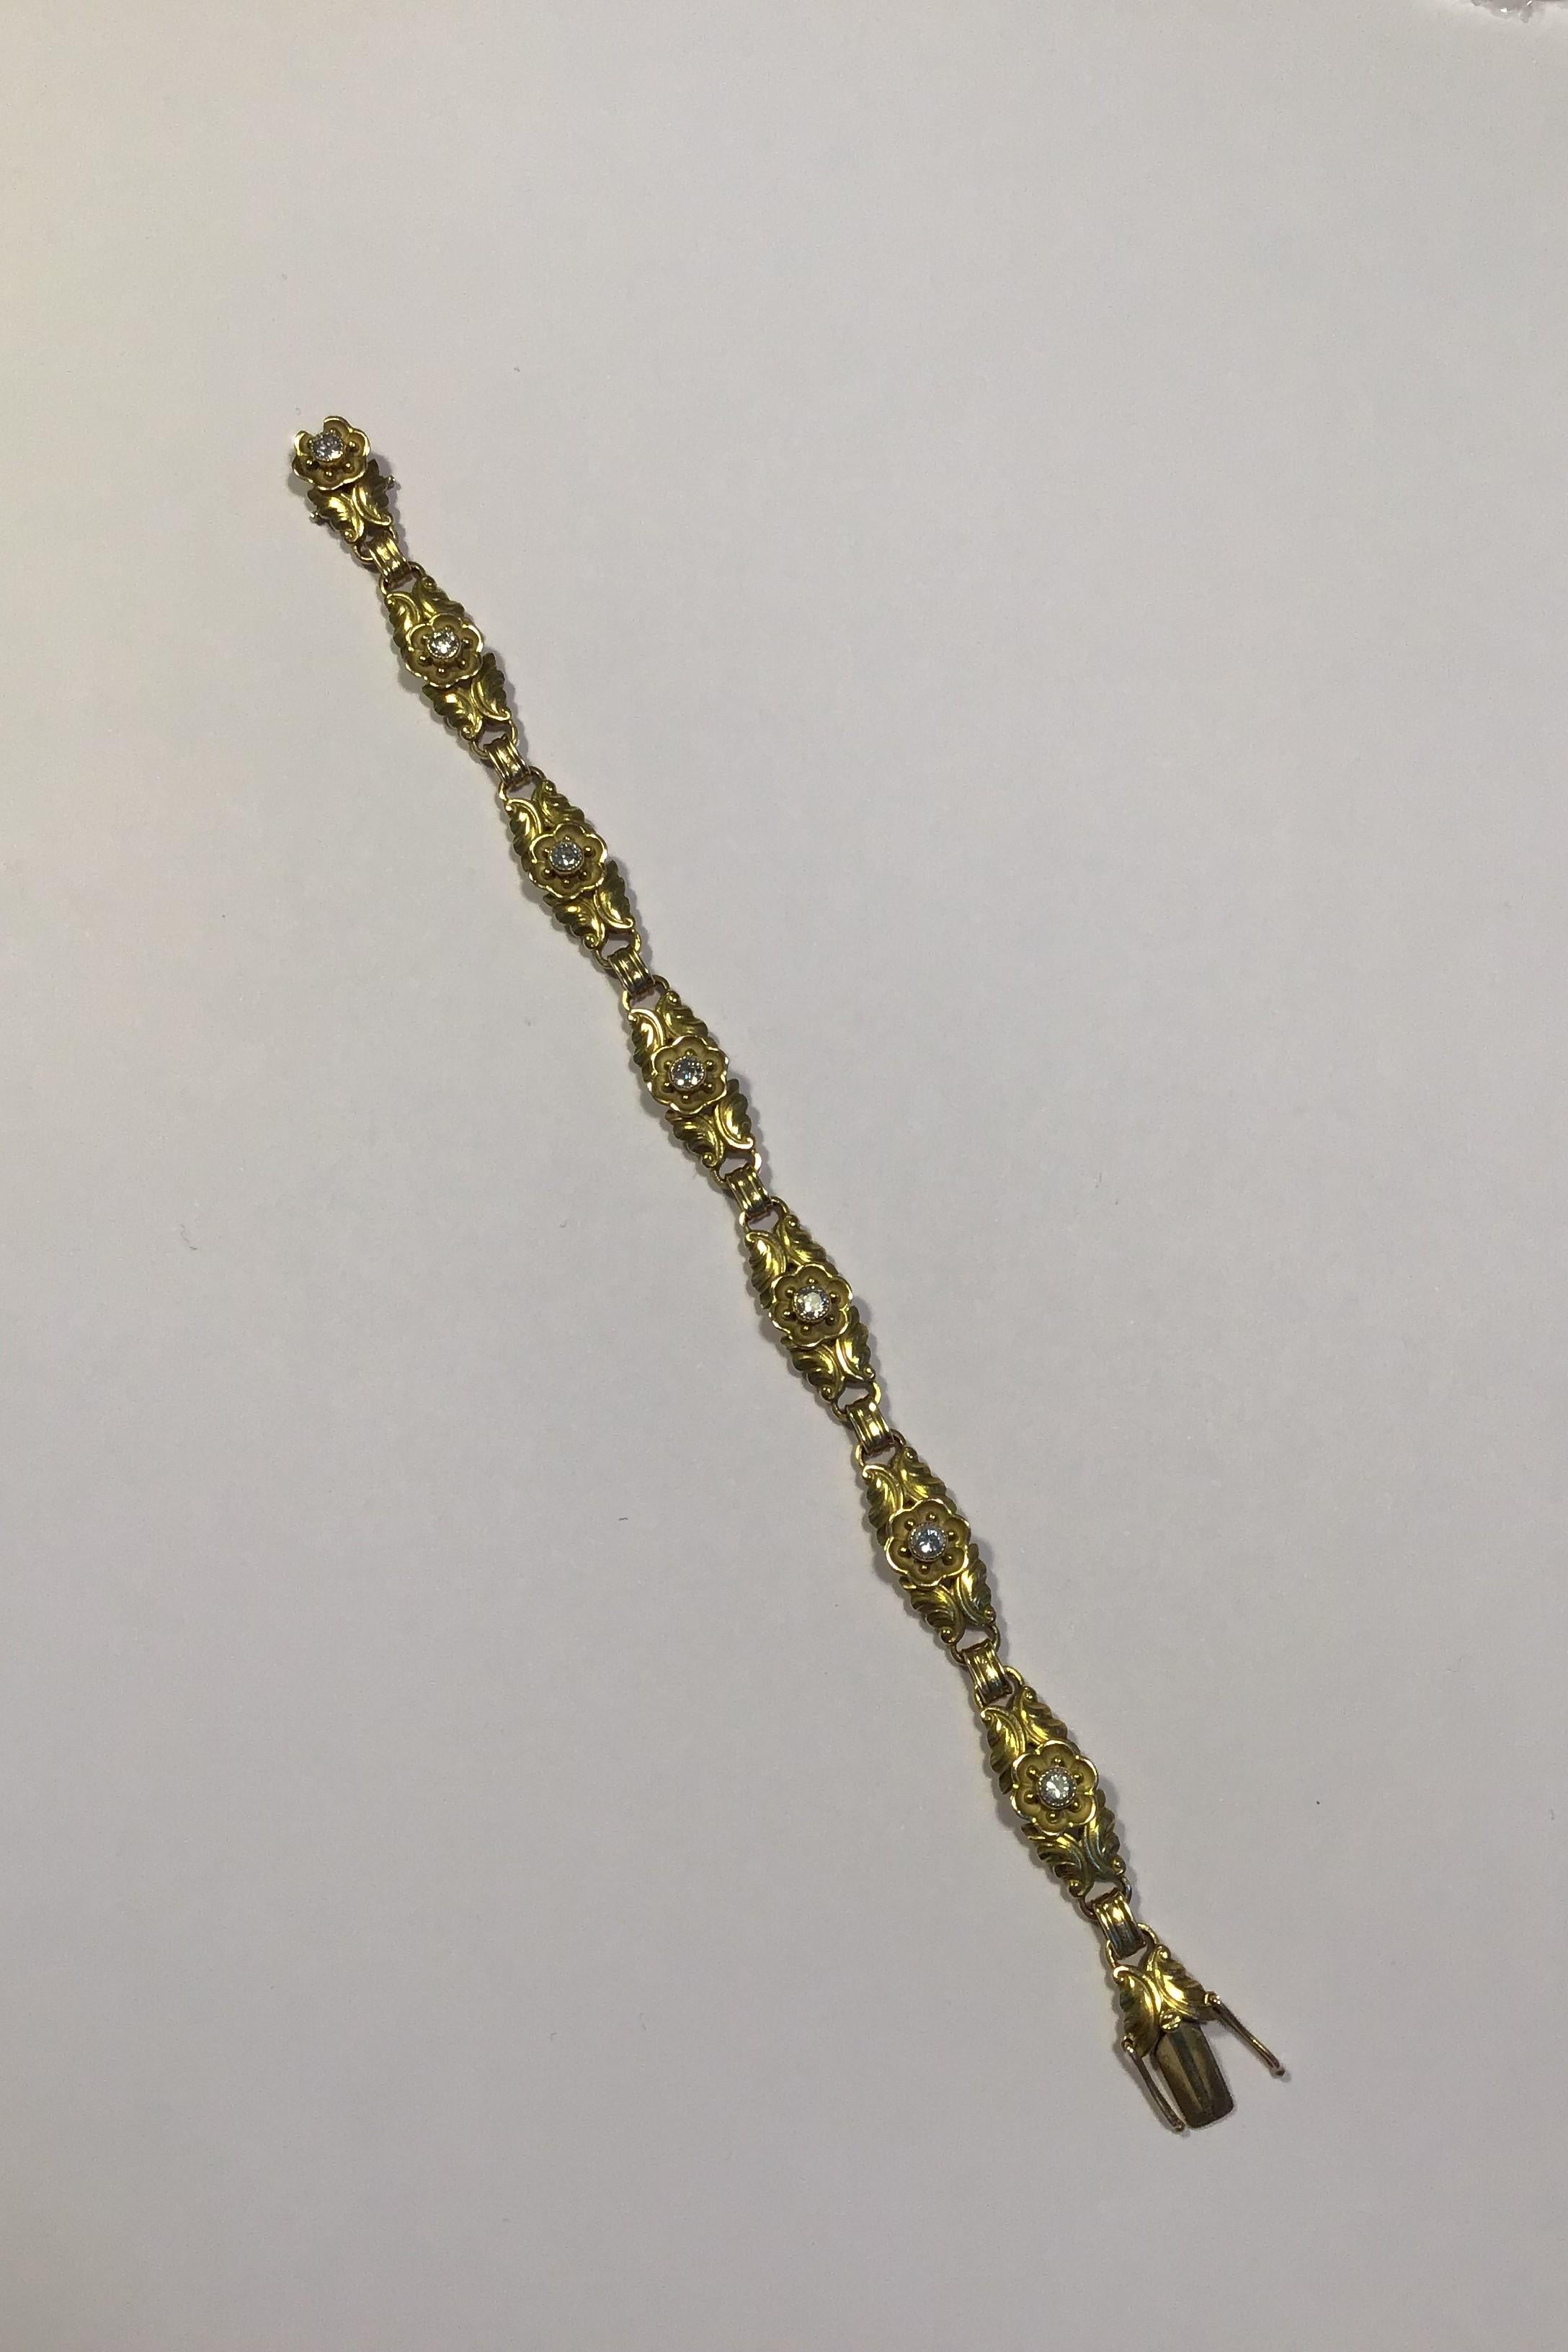 Georg Jensen 14K Gold Segmented Bracelet with Brilliants No 251. Manufactured 1930-1945 L 18.5 cm/6.49